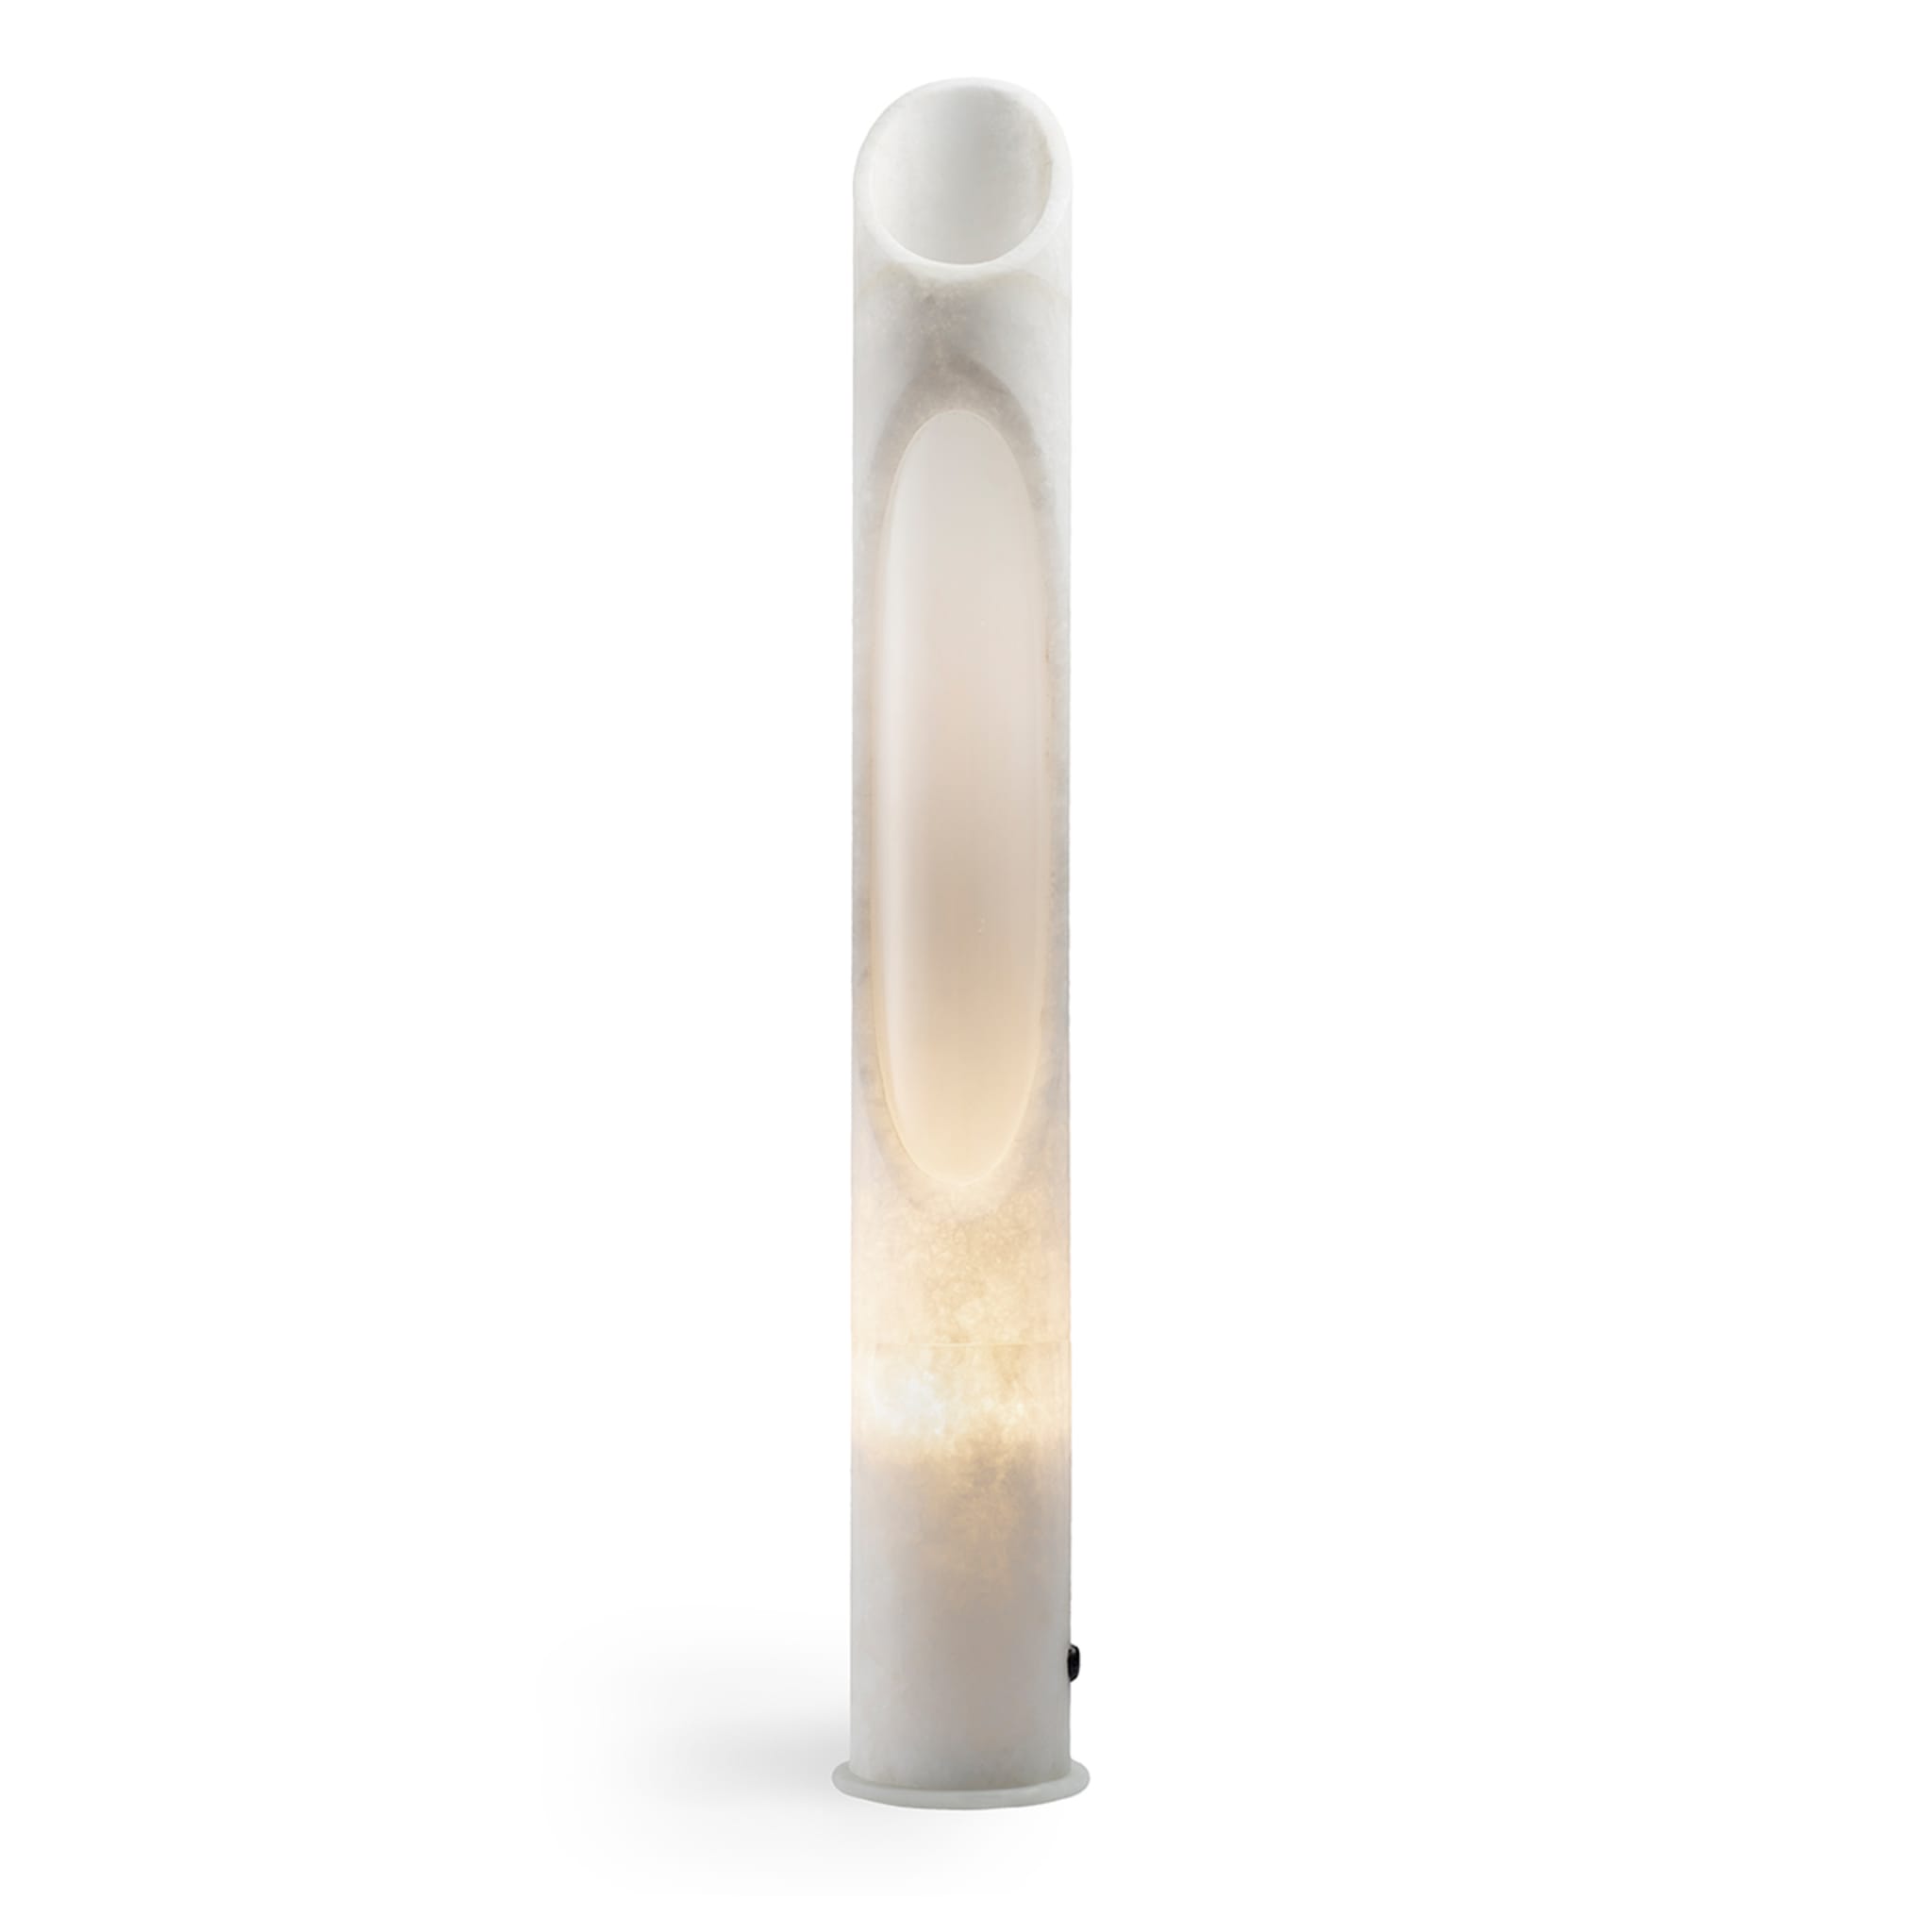  Lampe Armonia L en marbre blanc onyx de Jacopo Simonetti - Vue alternative 1